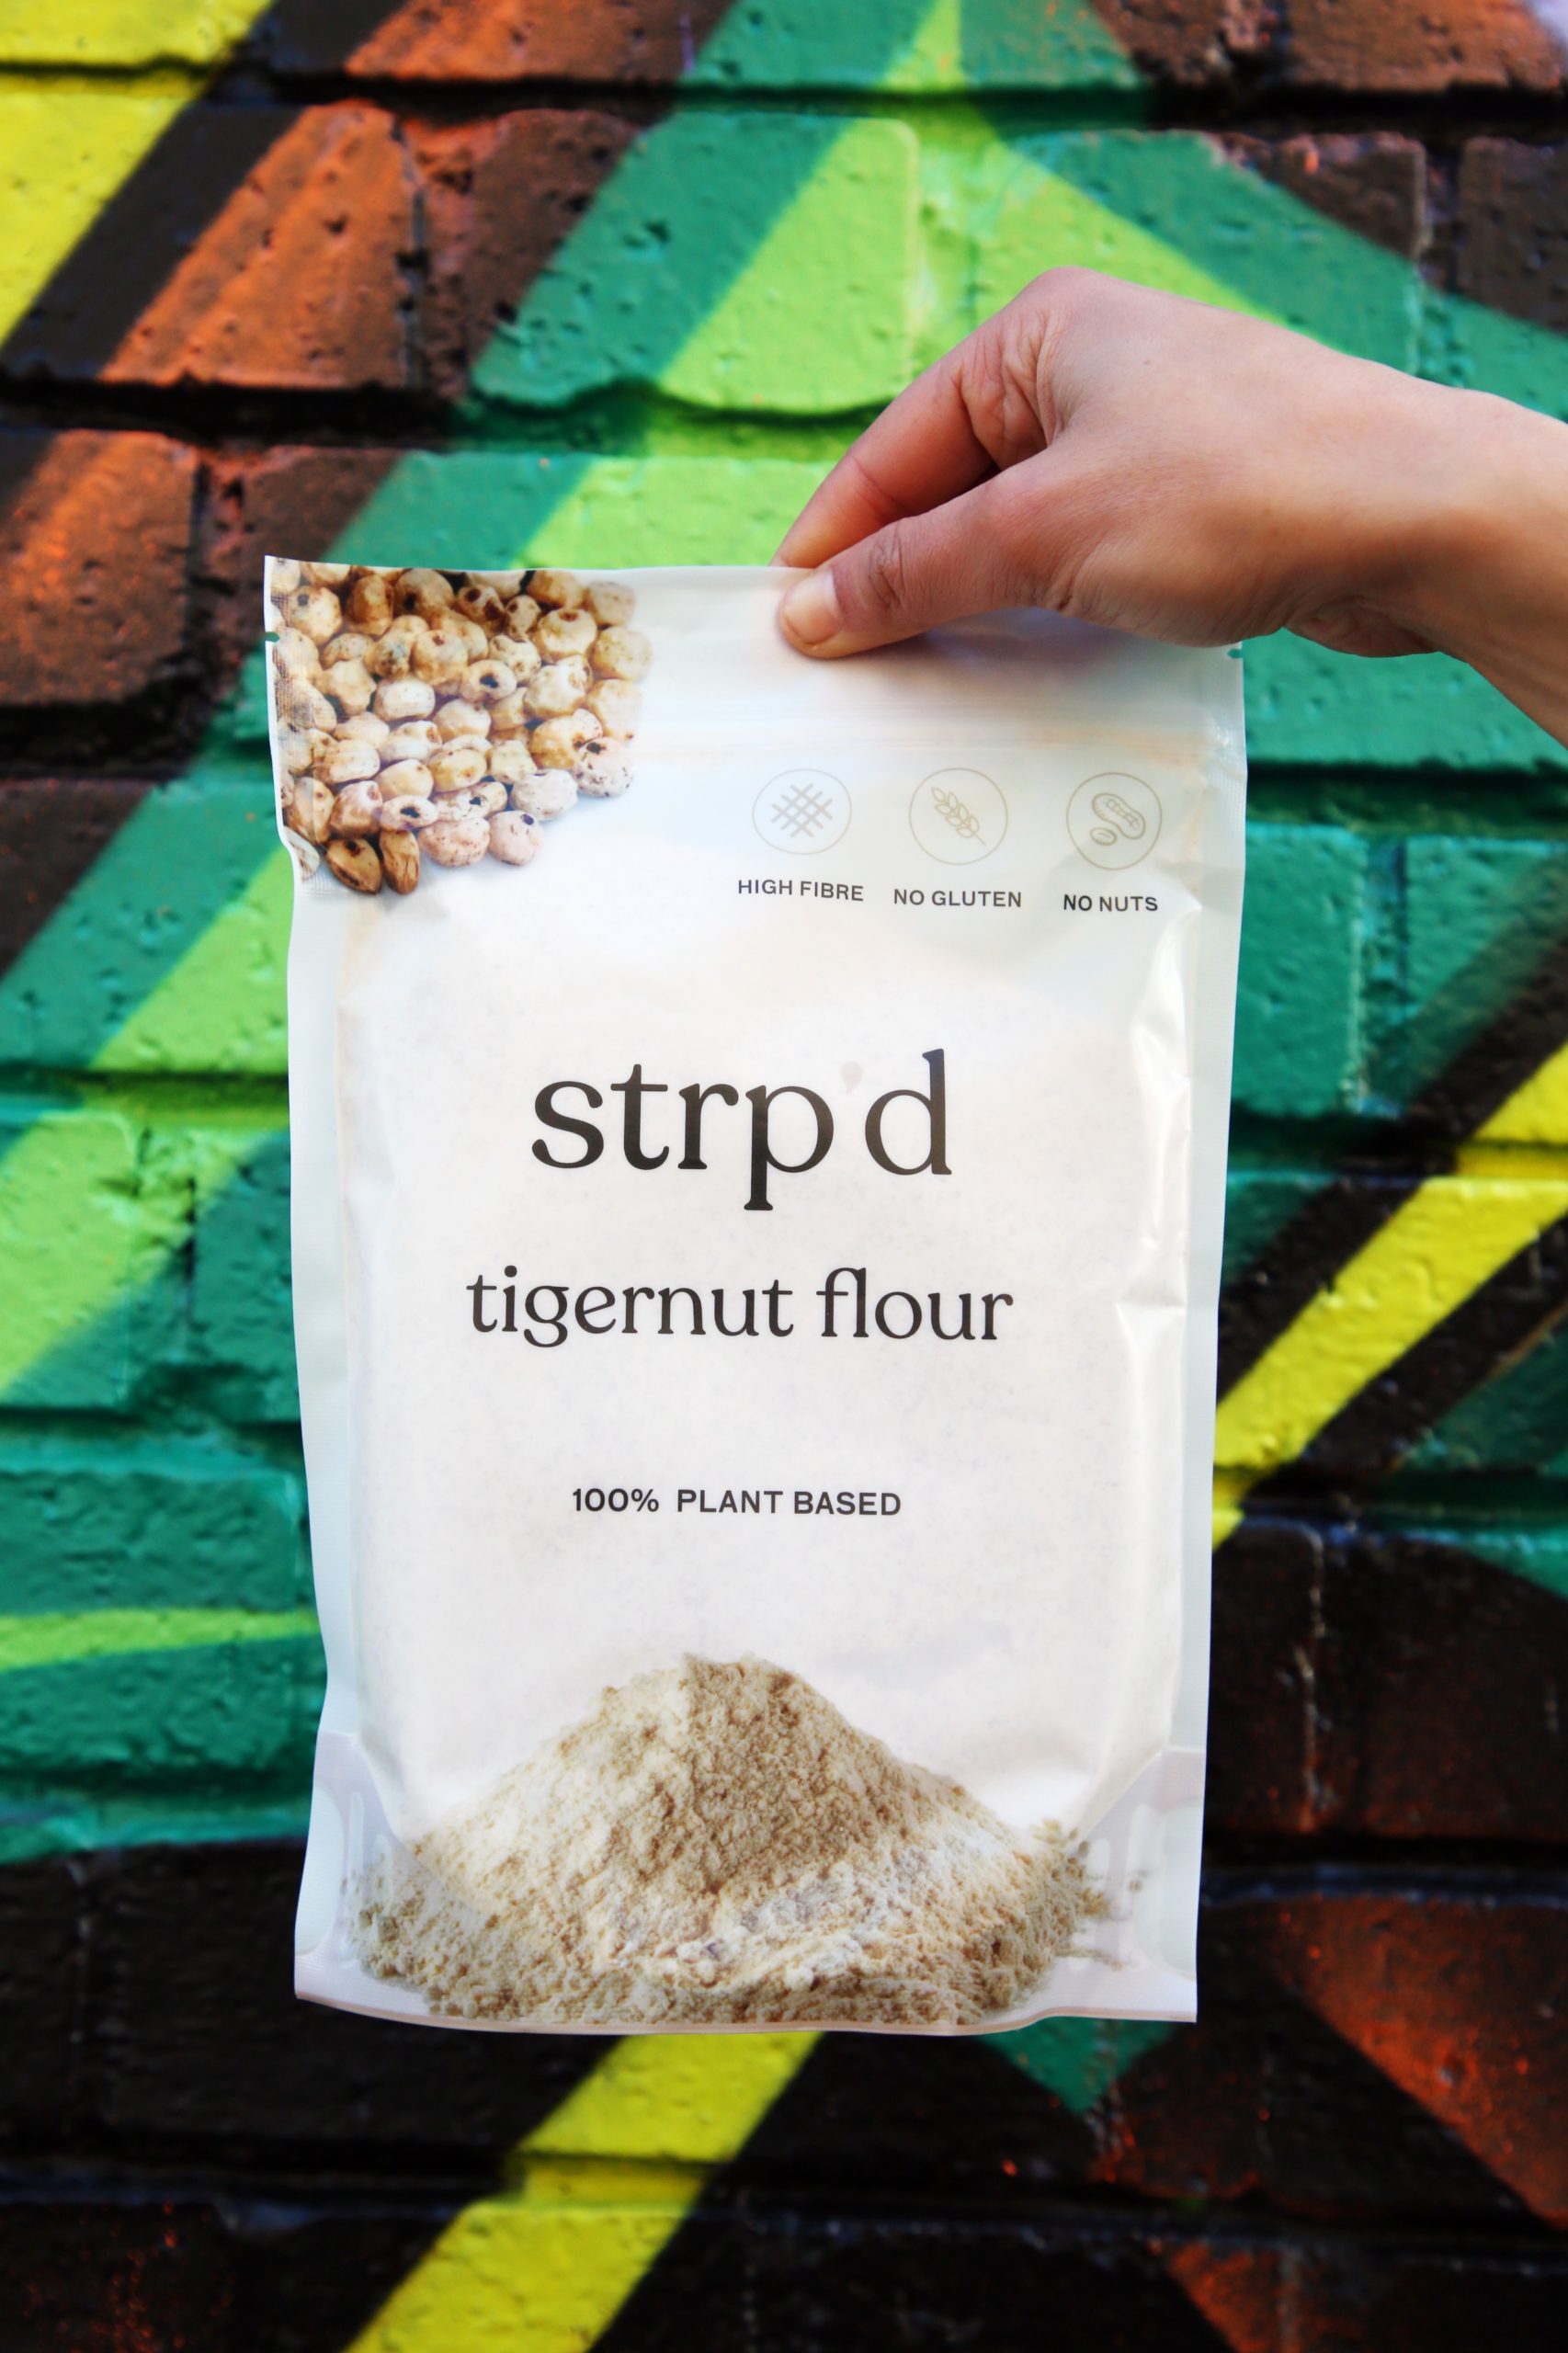 <img src="strpd.jpg" alt="strpd tigernut flour"/> 